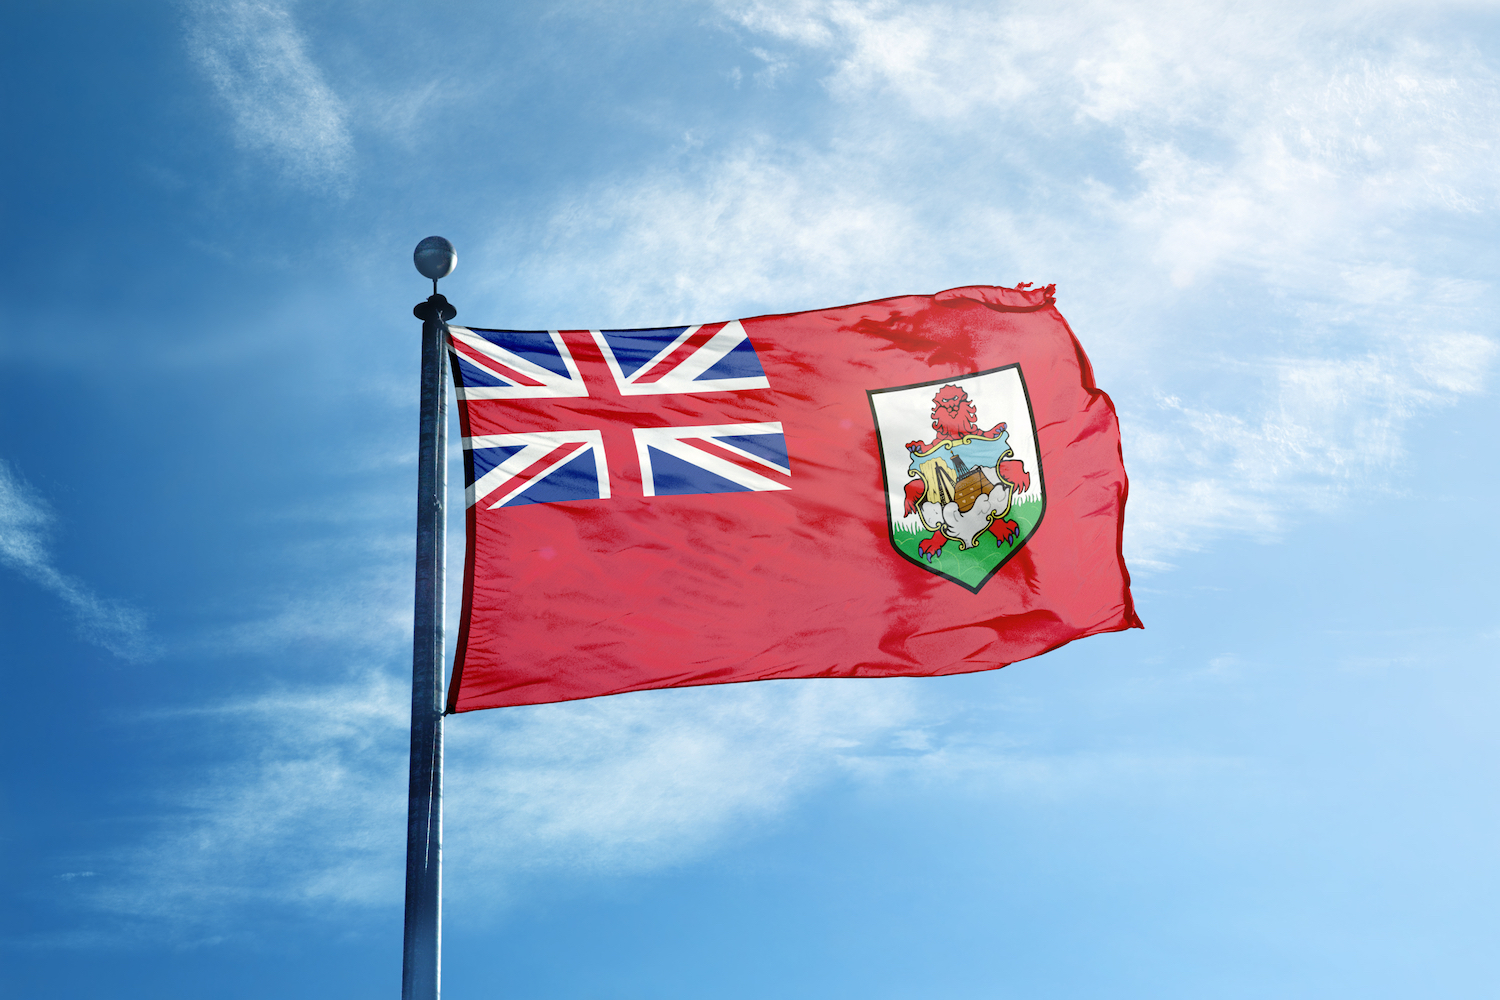 Government-of-bermuda-pilots-stimulus-token-in-response-to-covid-crisis